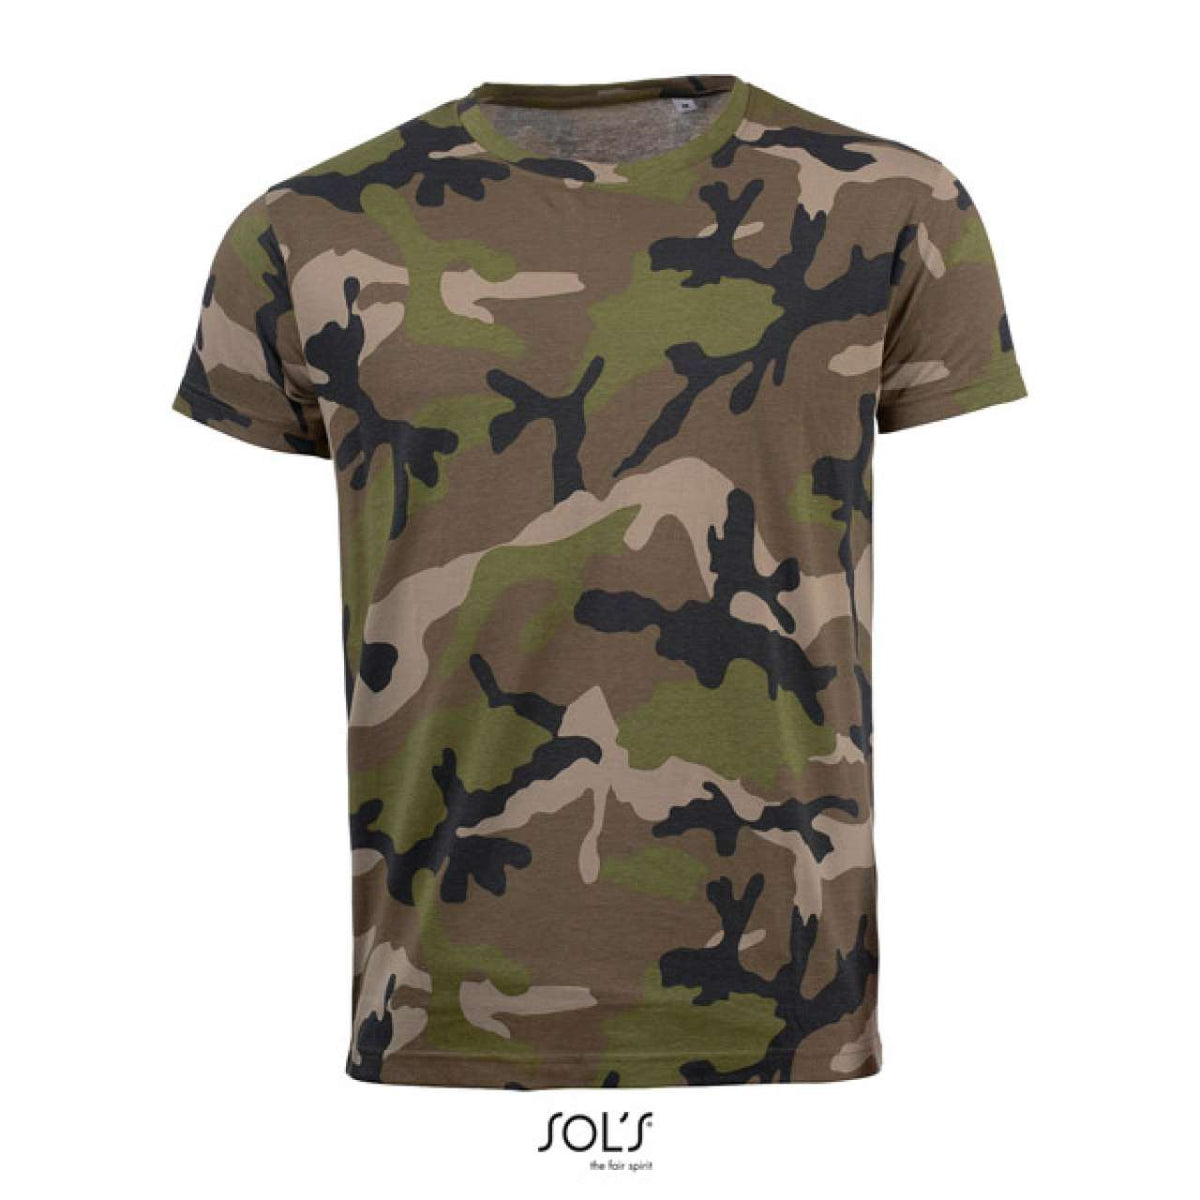 SOL'S Herren Camouflage T-Shirt Army Tarn Shirt Tarnshirt Camo